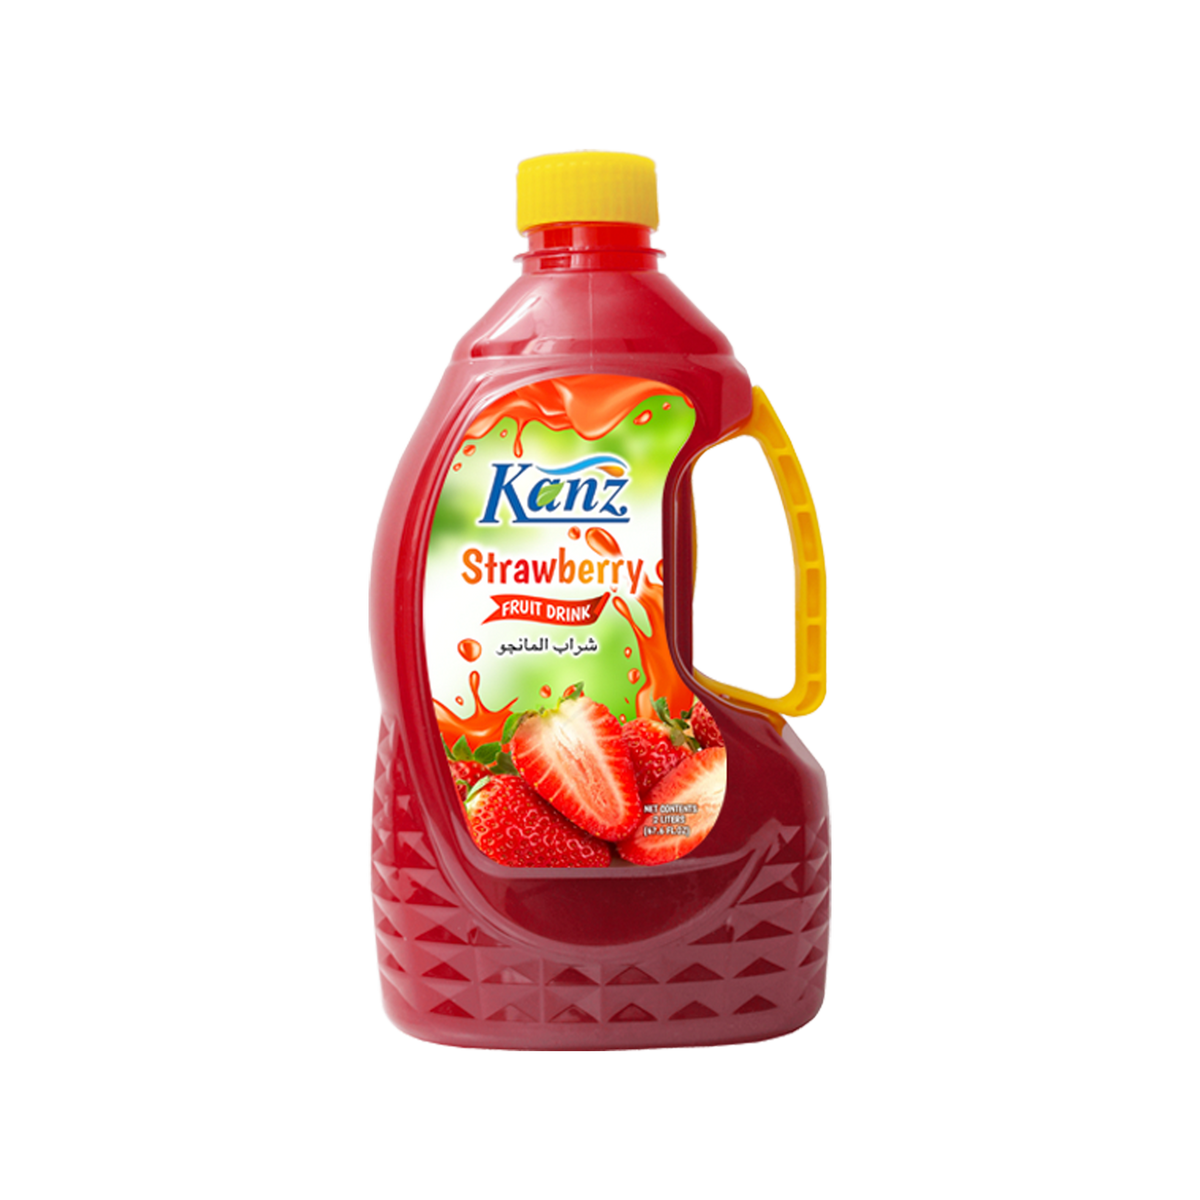 KANZ Strawberry Juice Drink 2L